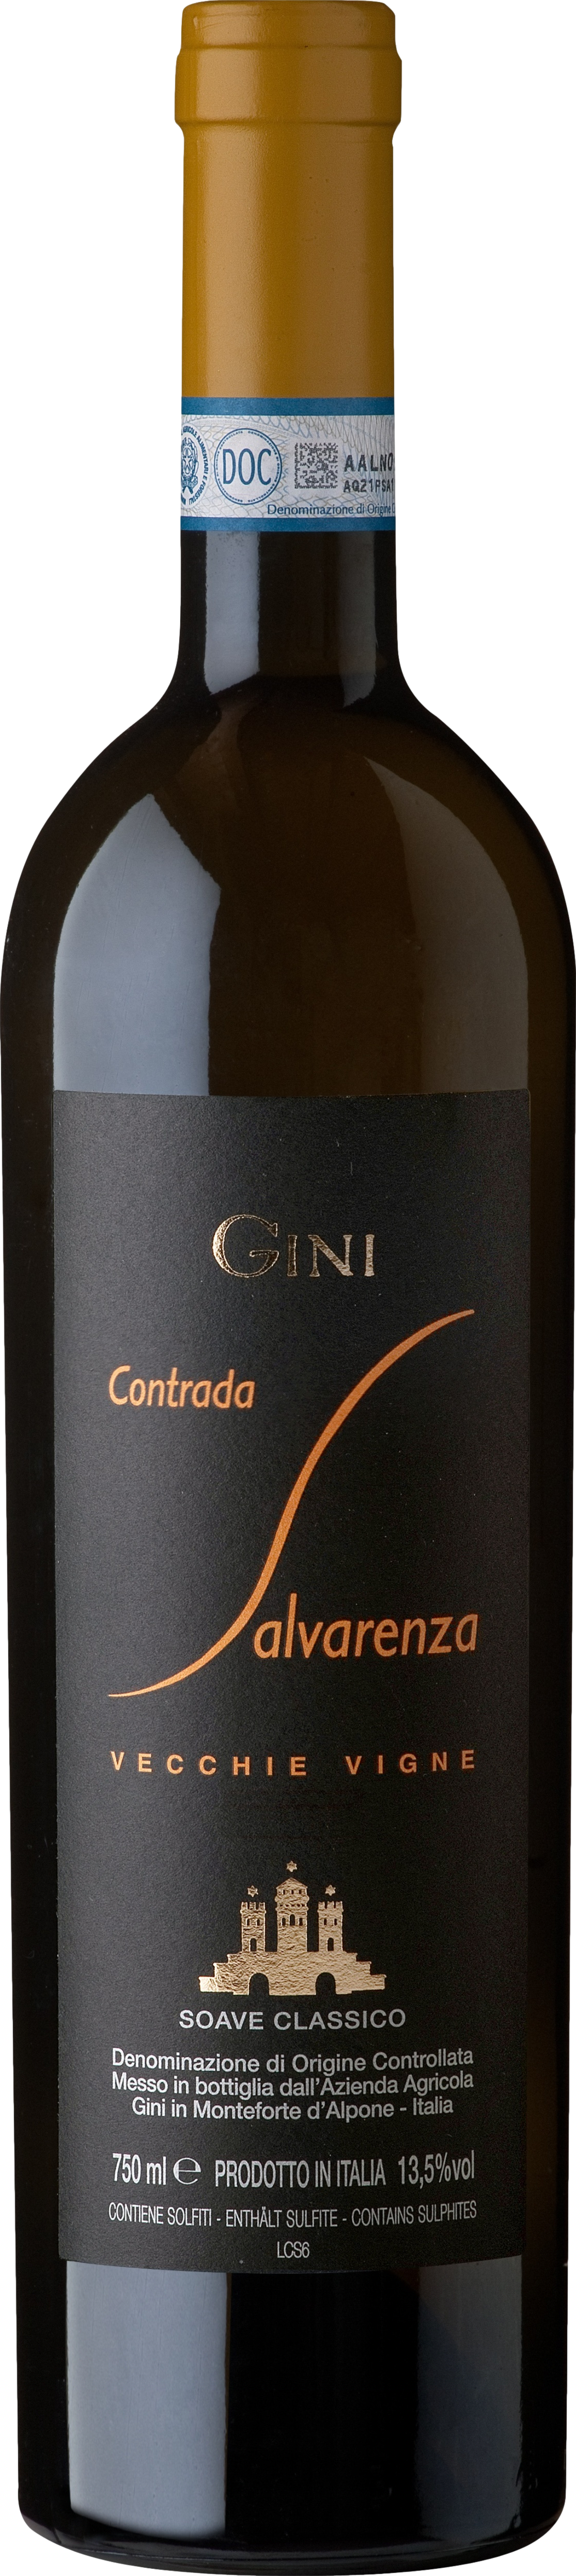 Gini Contrada Salvarenza Vecchie Vigne Soave Classico 2016